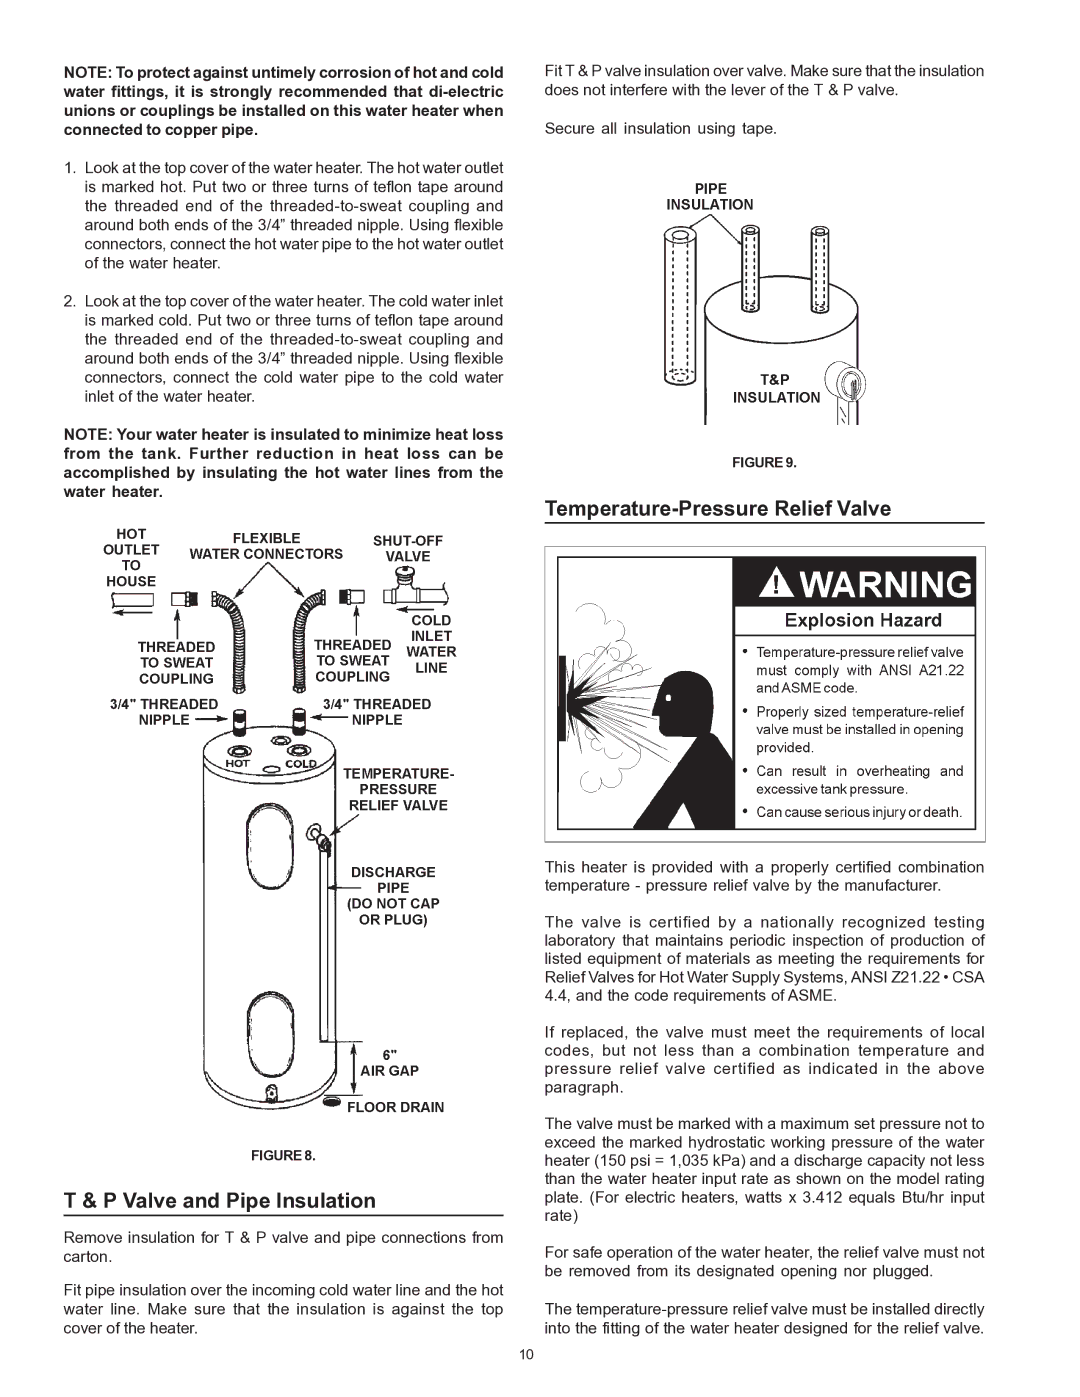 Sears 153.329264 owner manual Valve and Pipe Insulation, Temperature-Pressure Relief Valve 